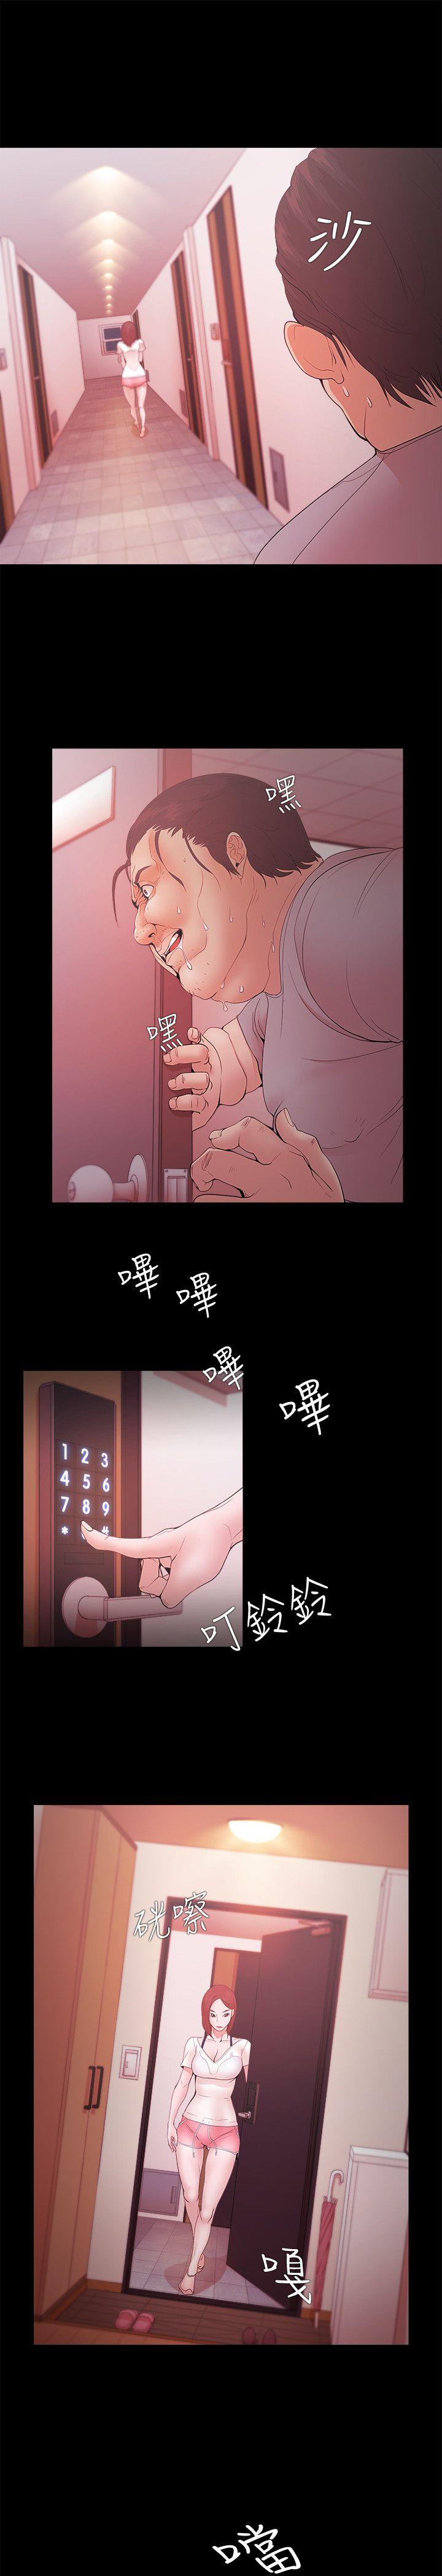 韩国污漫画 Loser 第16话 15